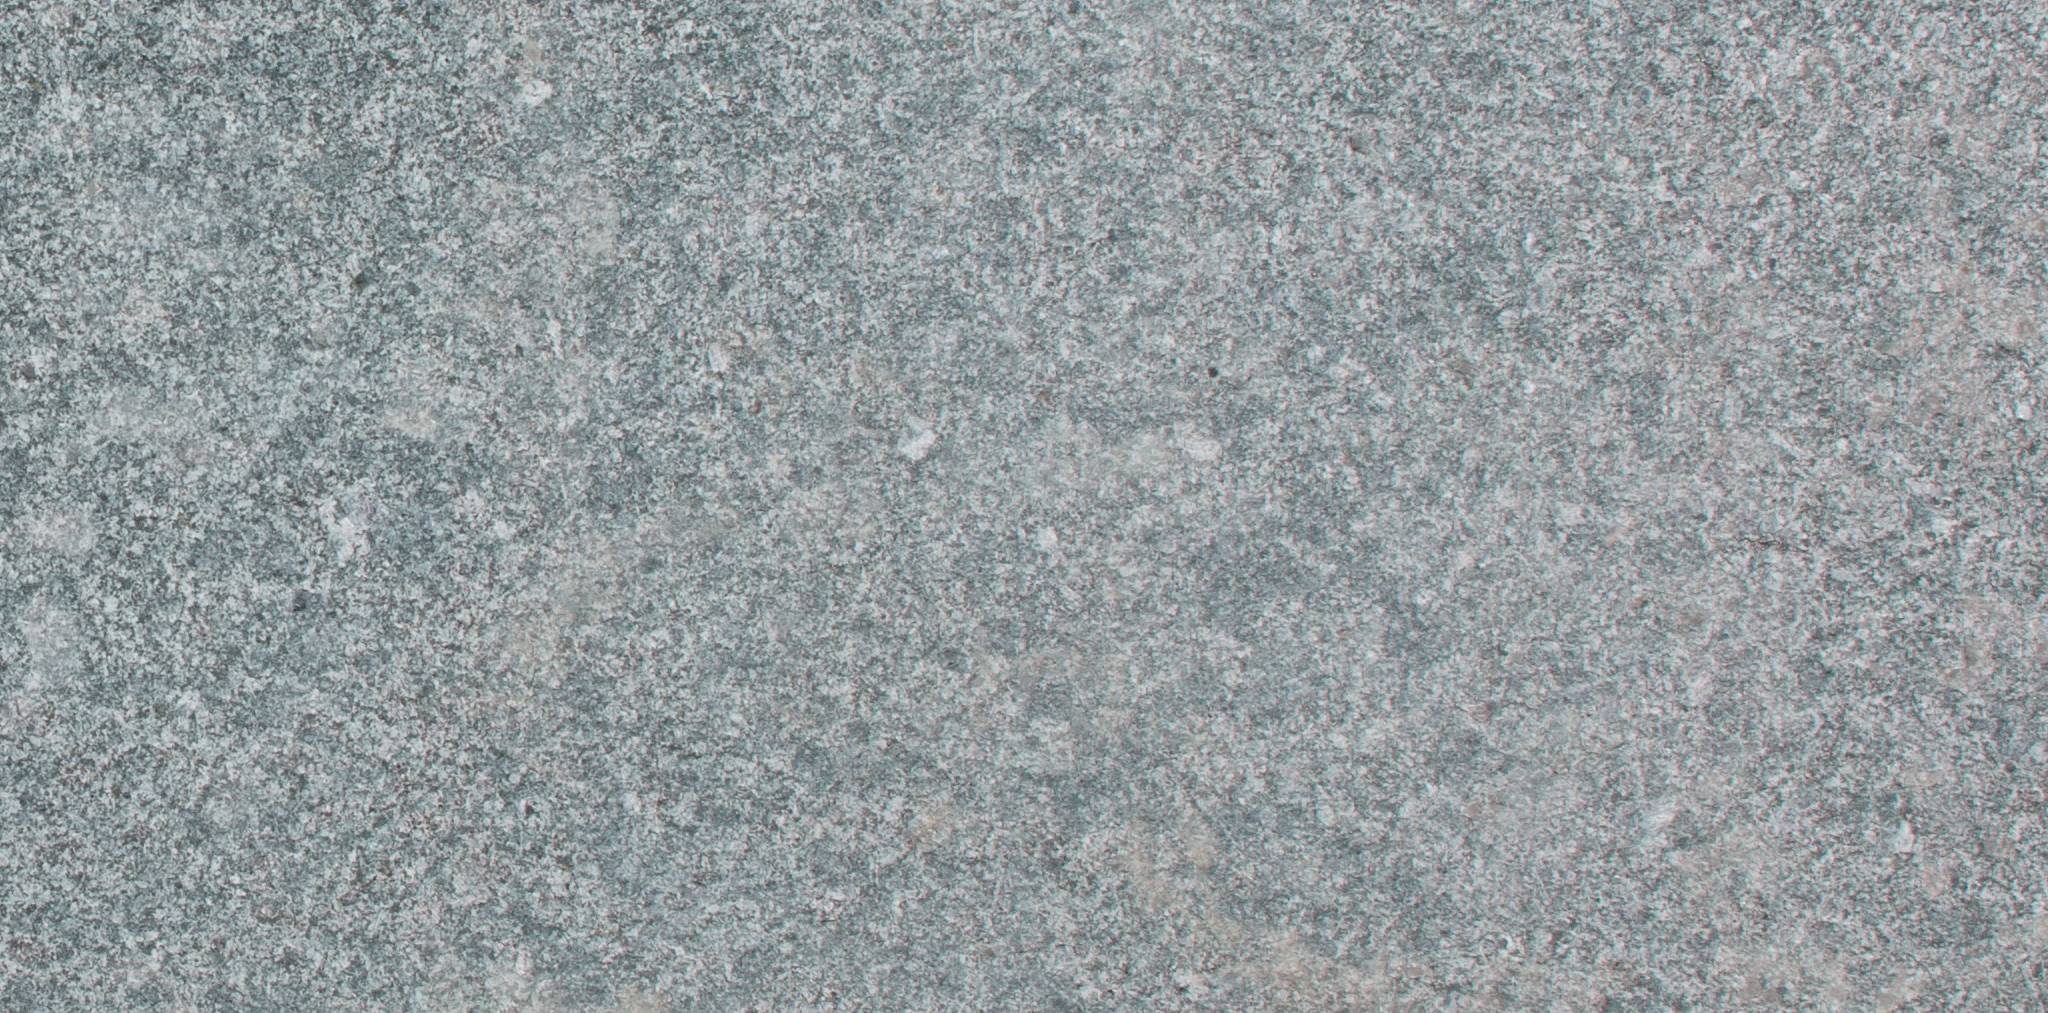 Namaka Granite Paving